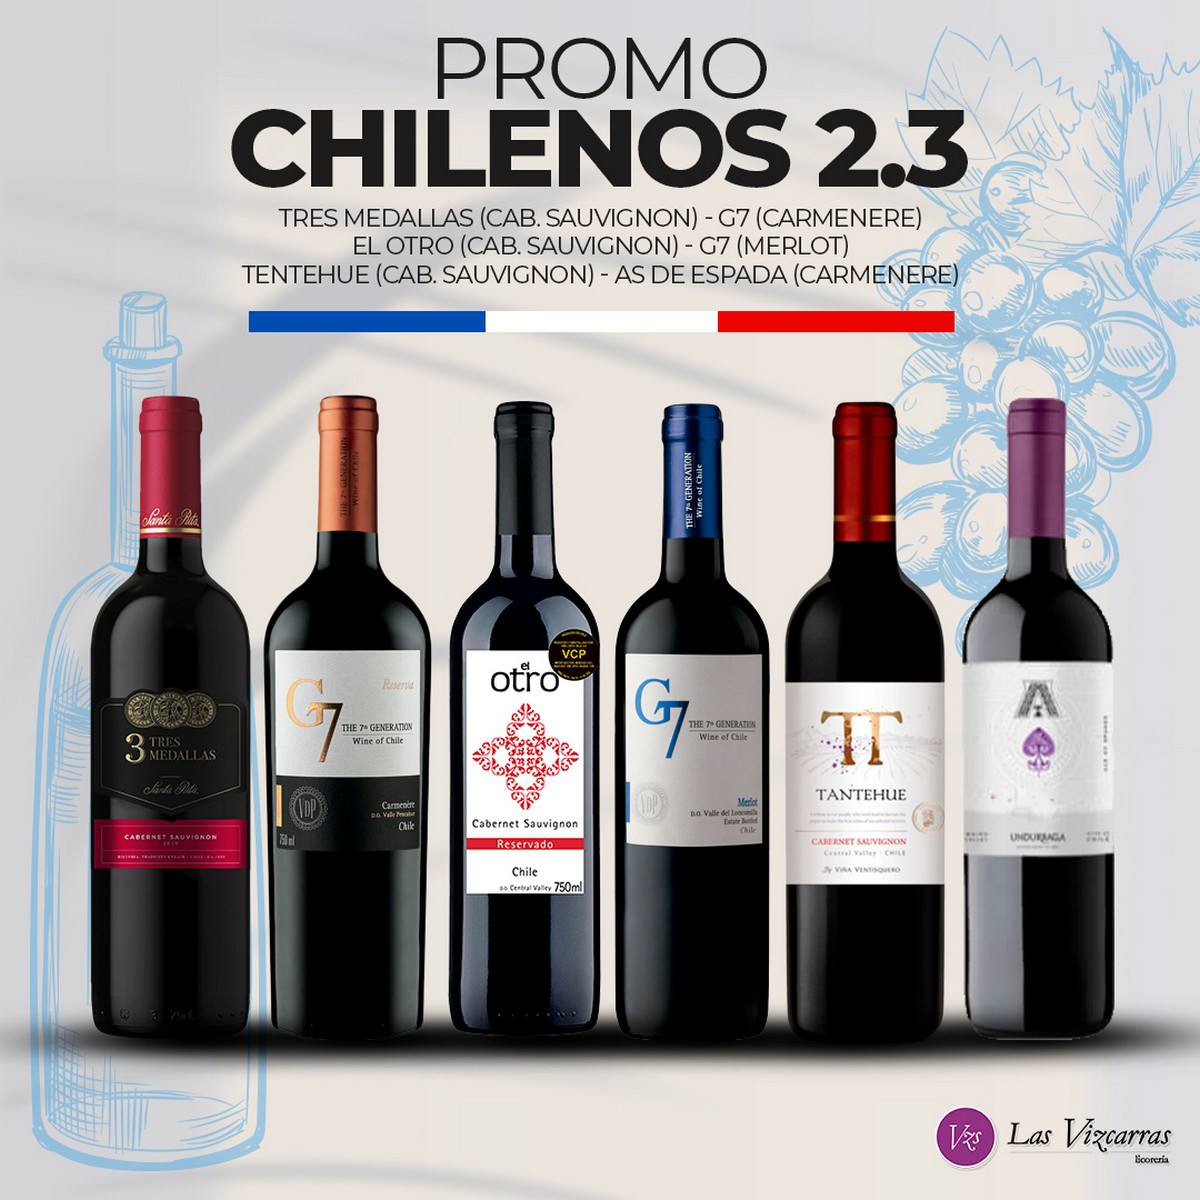 Chilenos-2.3-rrss